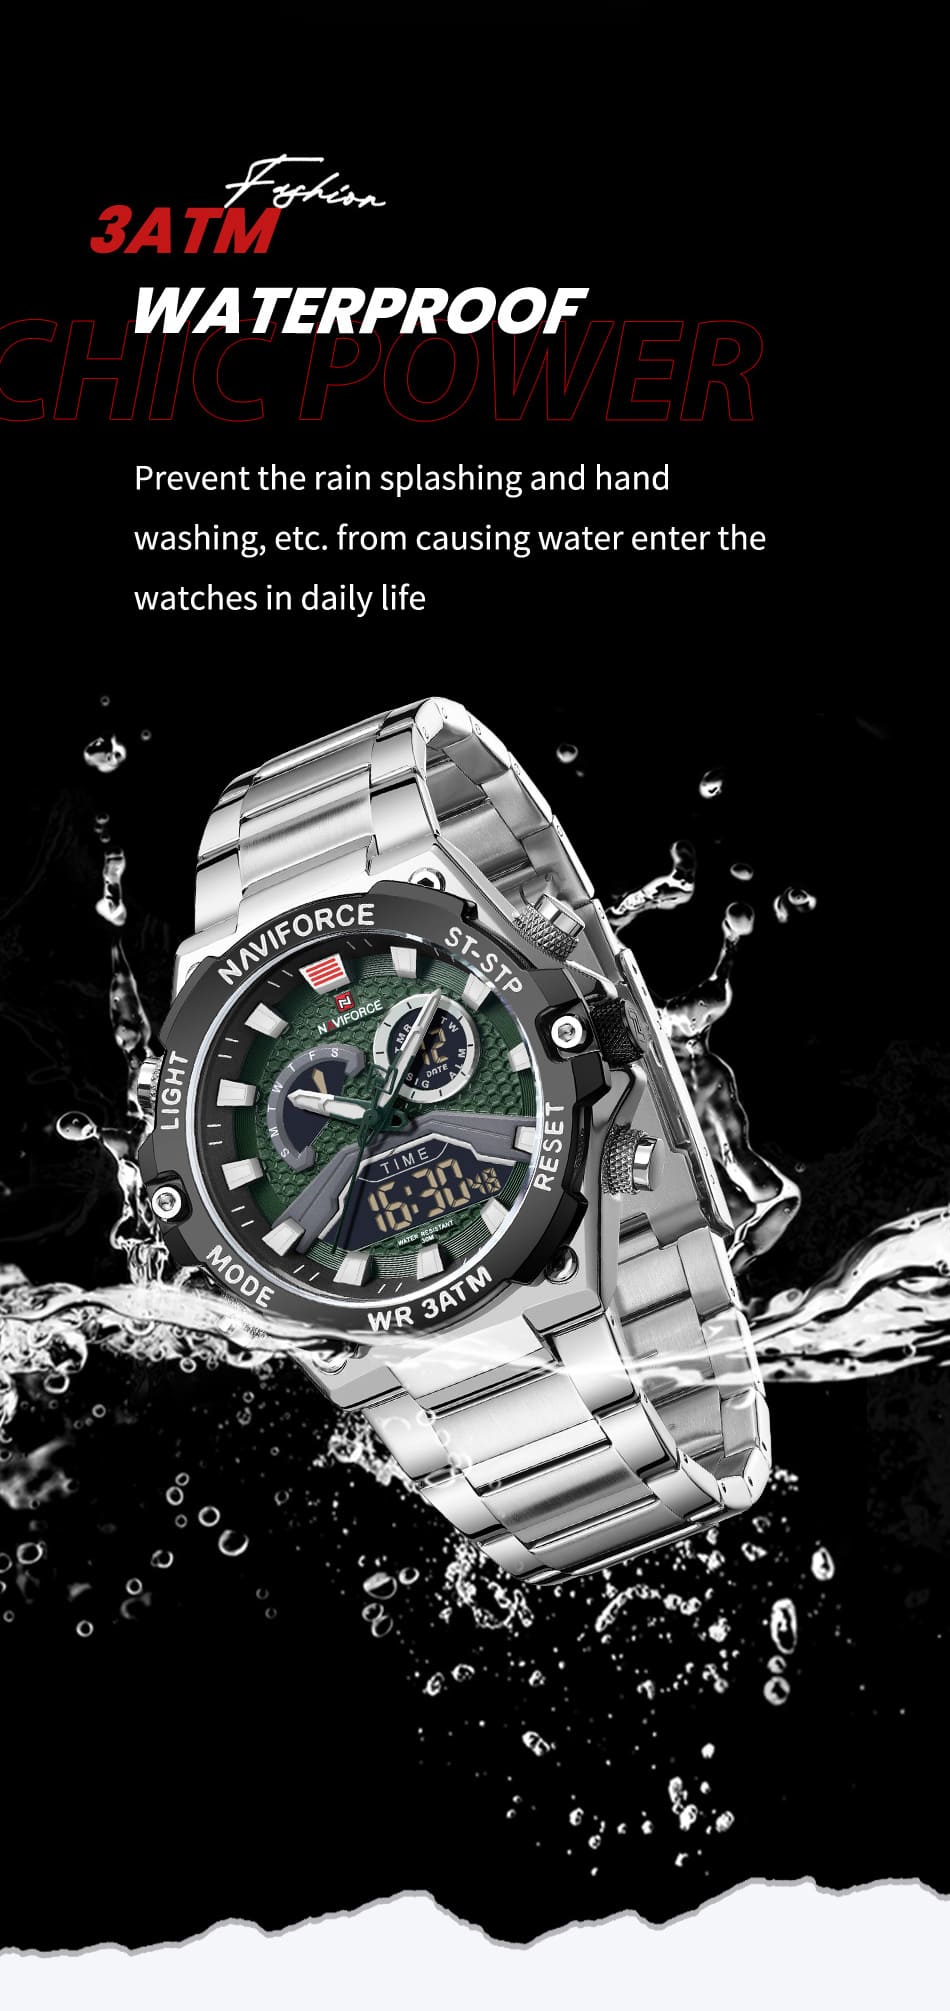 Naviforce Men's Watch NF9207 S B GN | Watches Prime